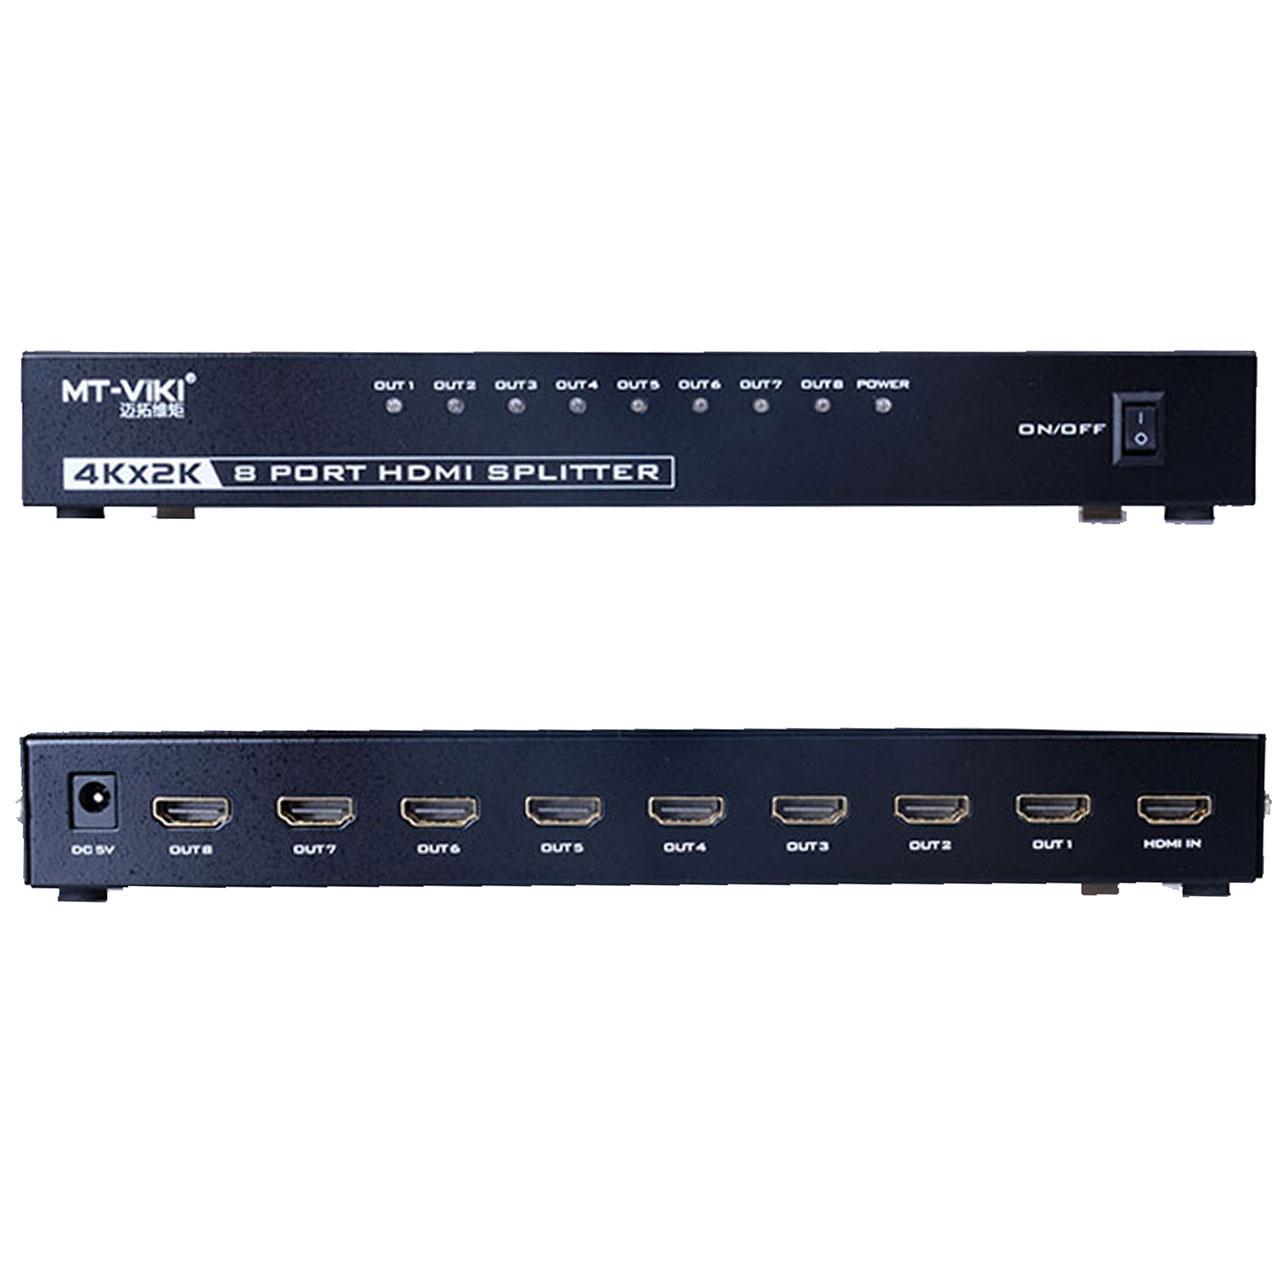 اسپلیتر 1 به 8 پورت HDMI مدل MT-SP148